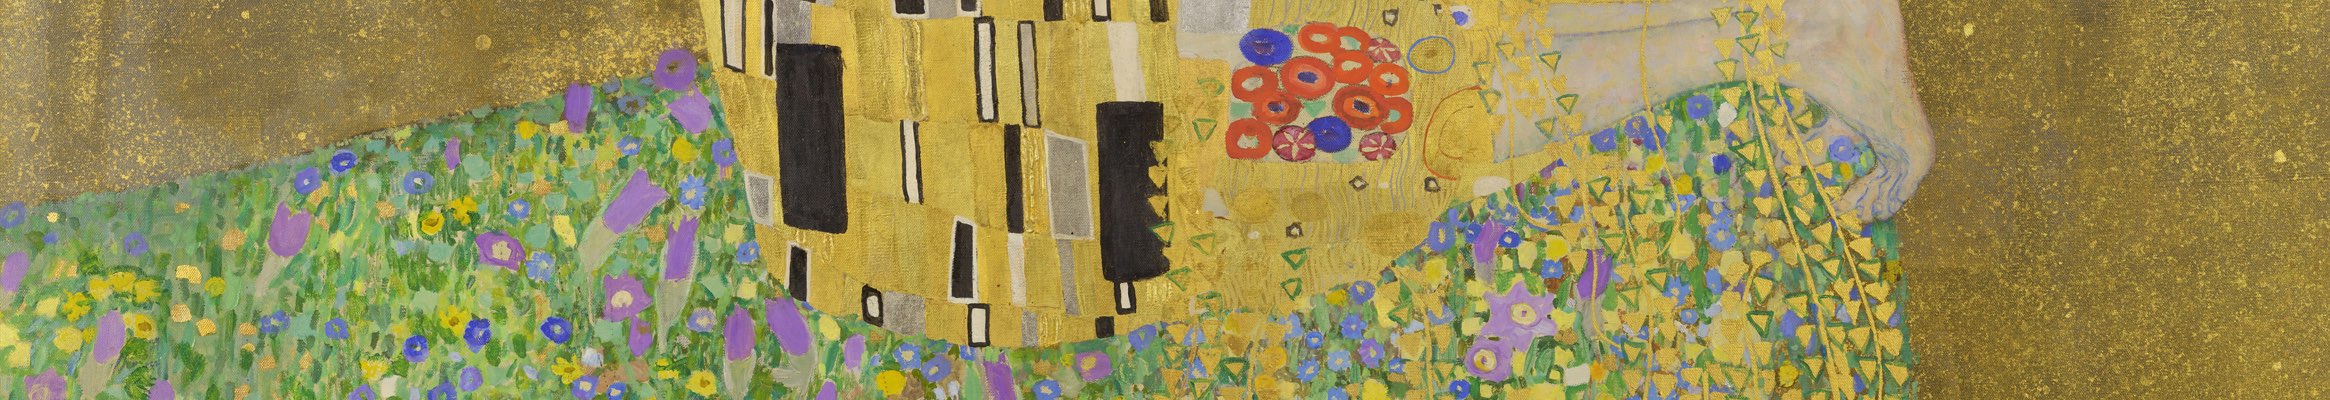 Gustav Klimt Reproductions